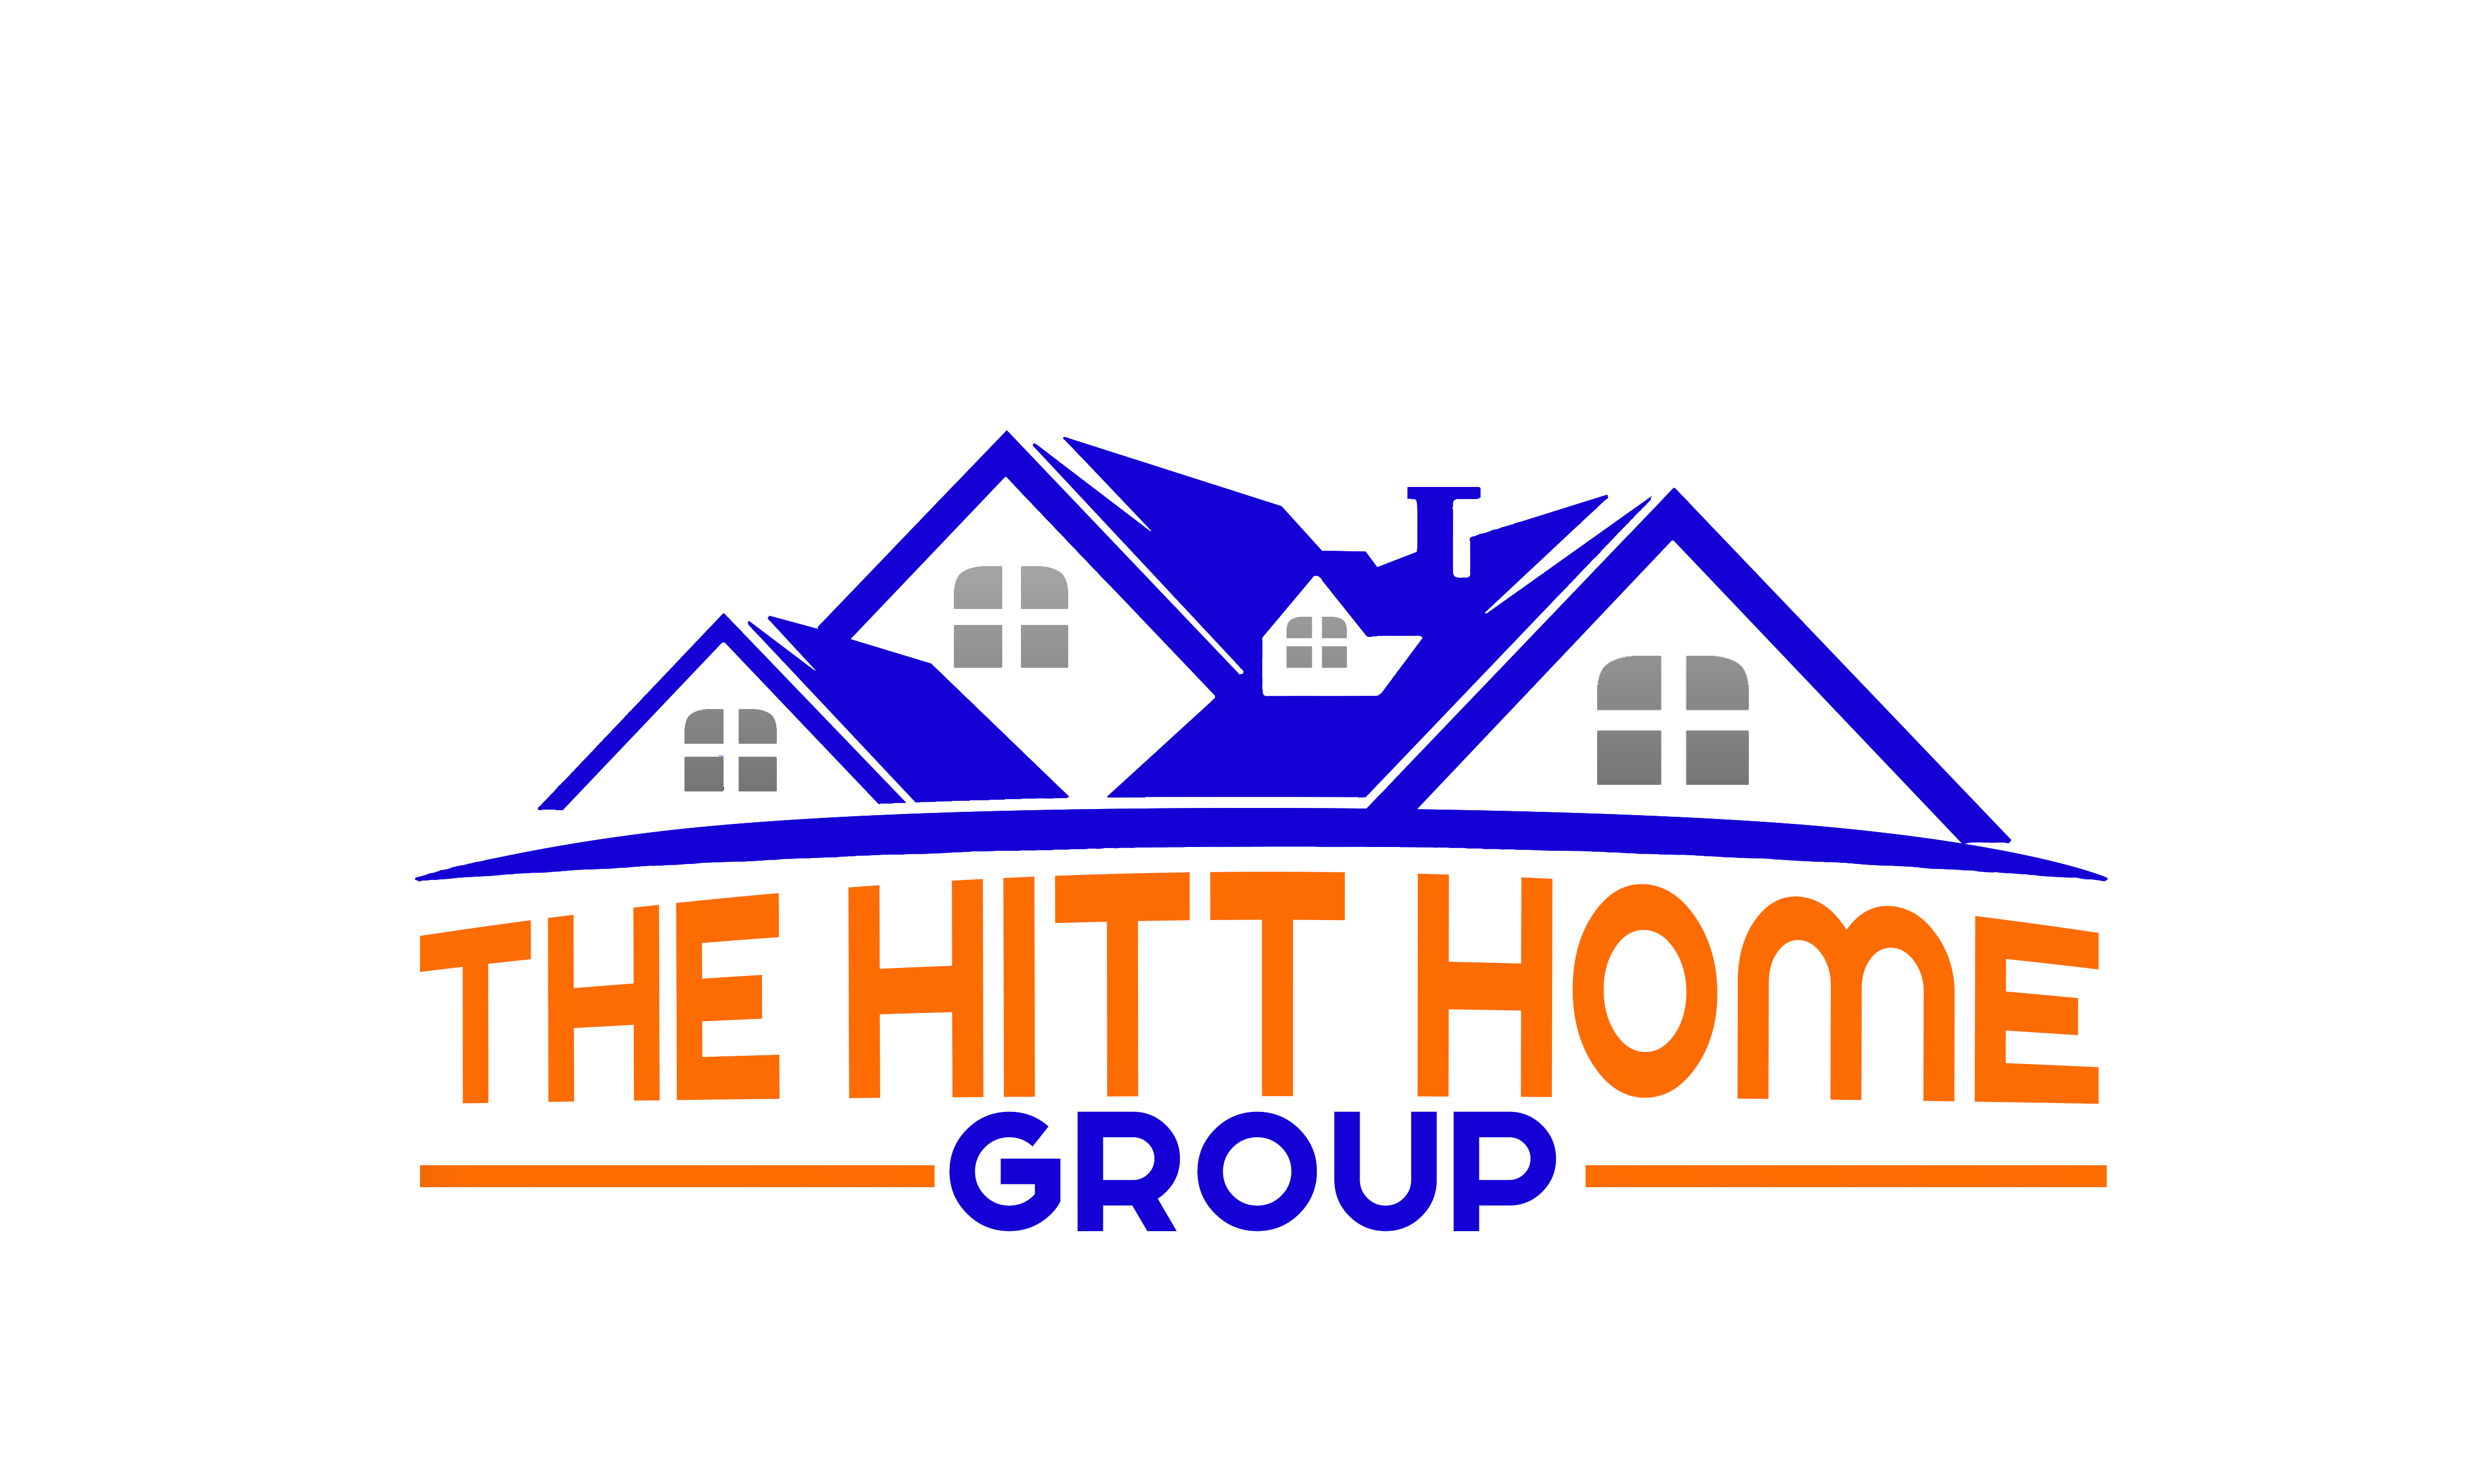 THE HITT HOME GROUP